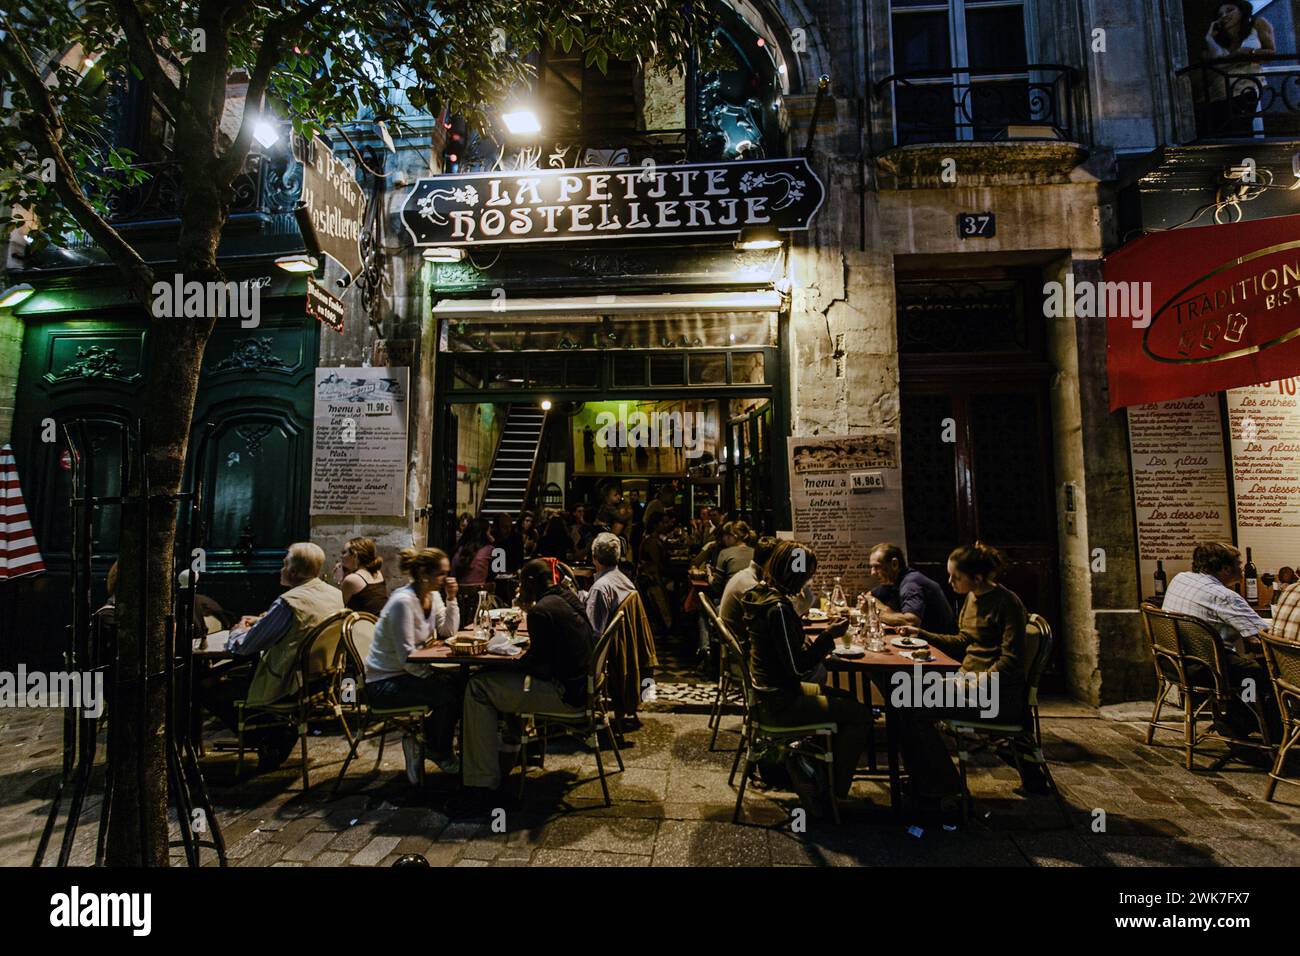 FRANCE / IIe-de-France/Paris/ Restaurant im Quartier Latin bei Nacht. Stockfoto